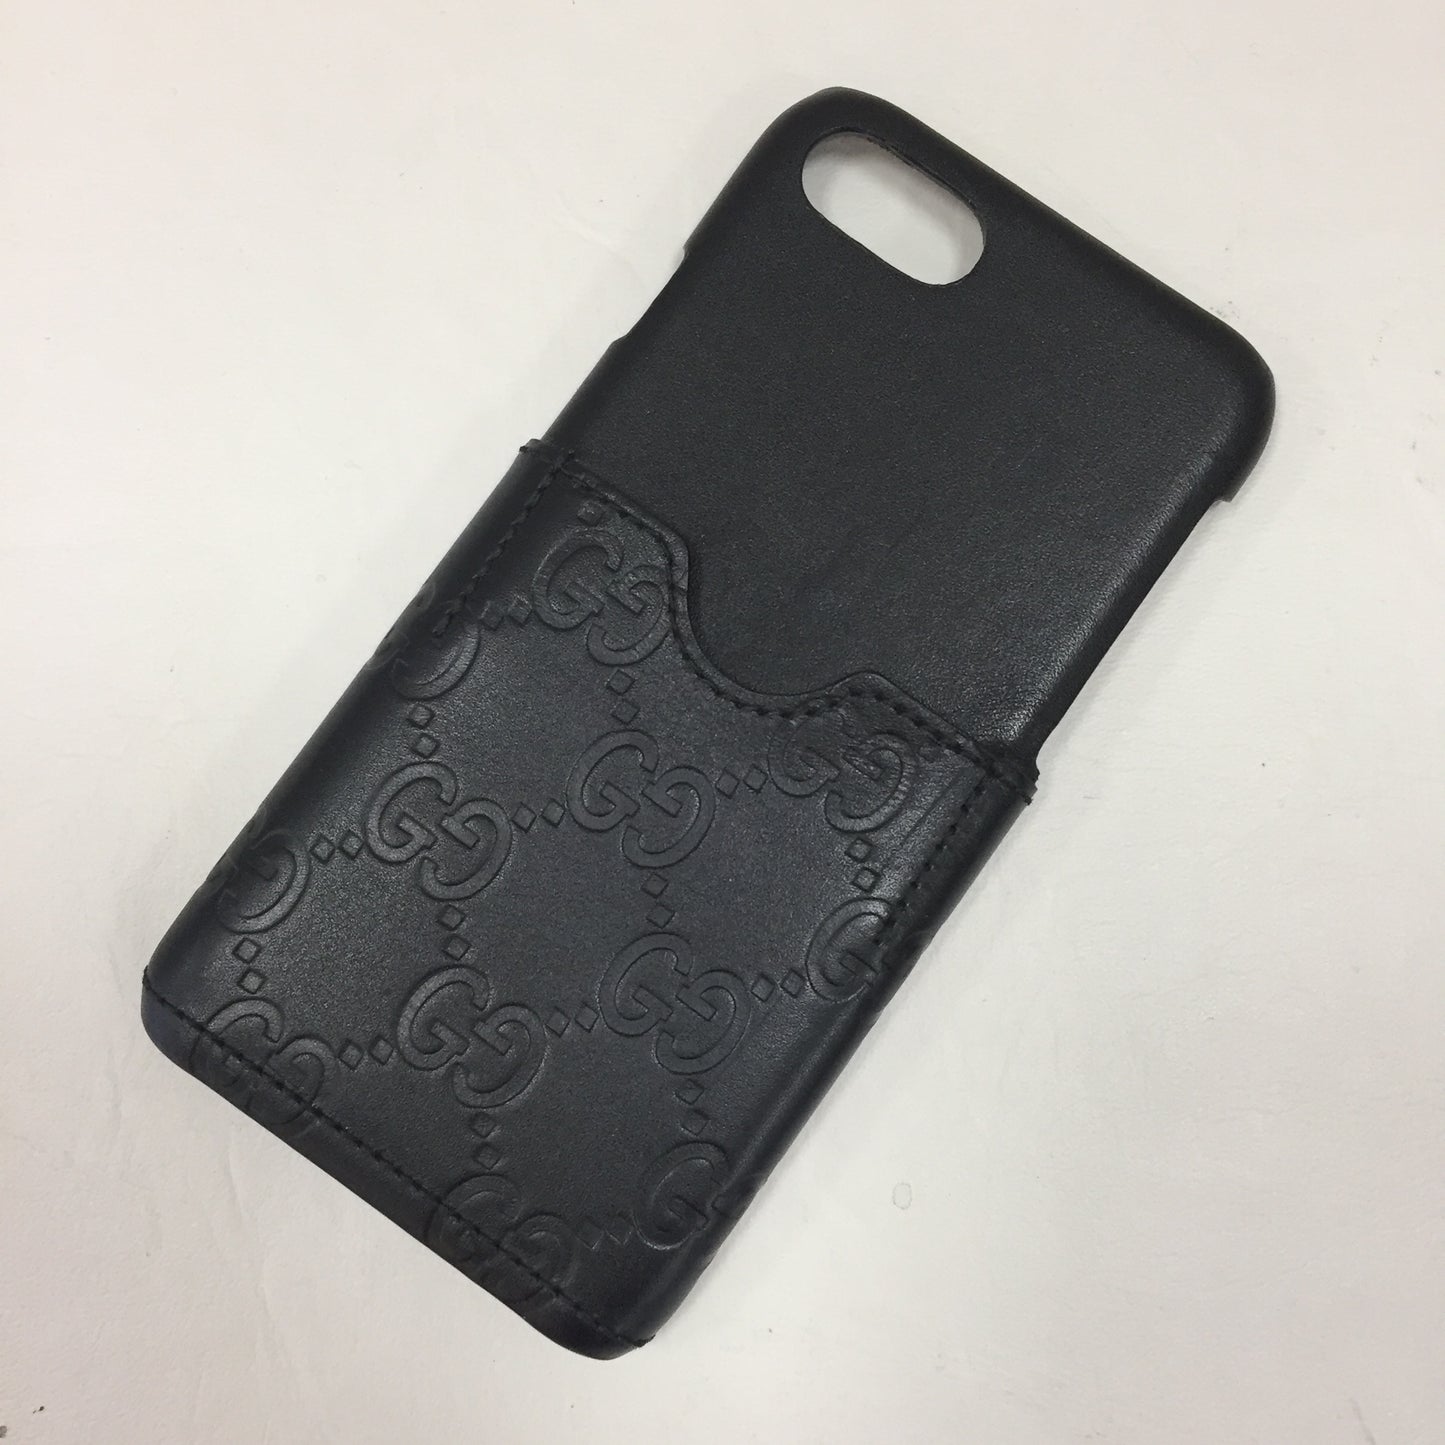 Gucci Black Leather iPhone 7/8 Phone Case